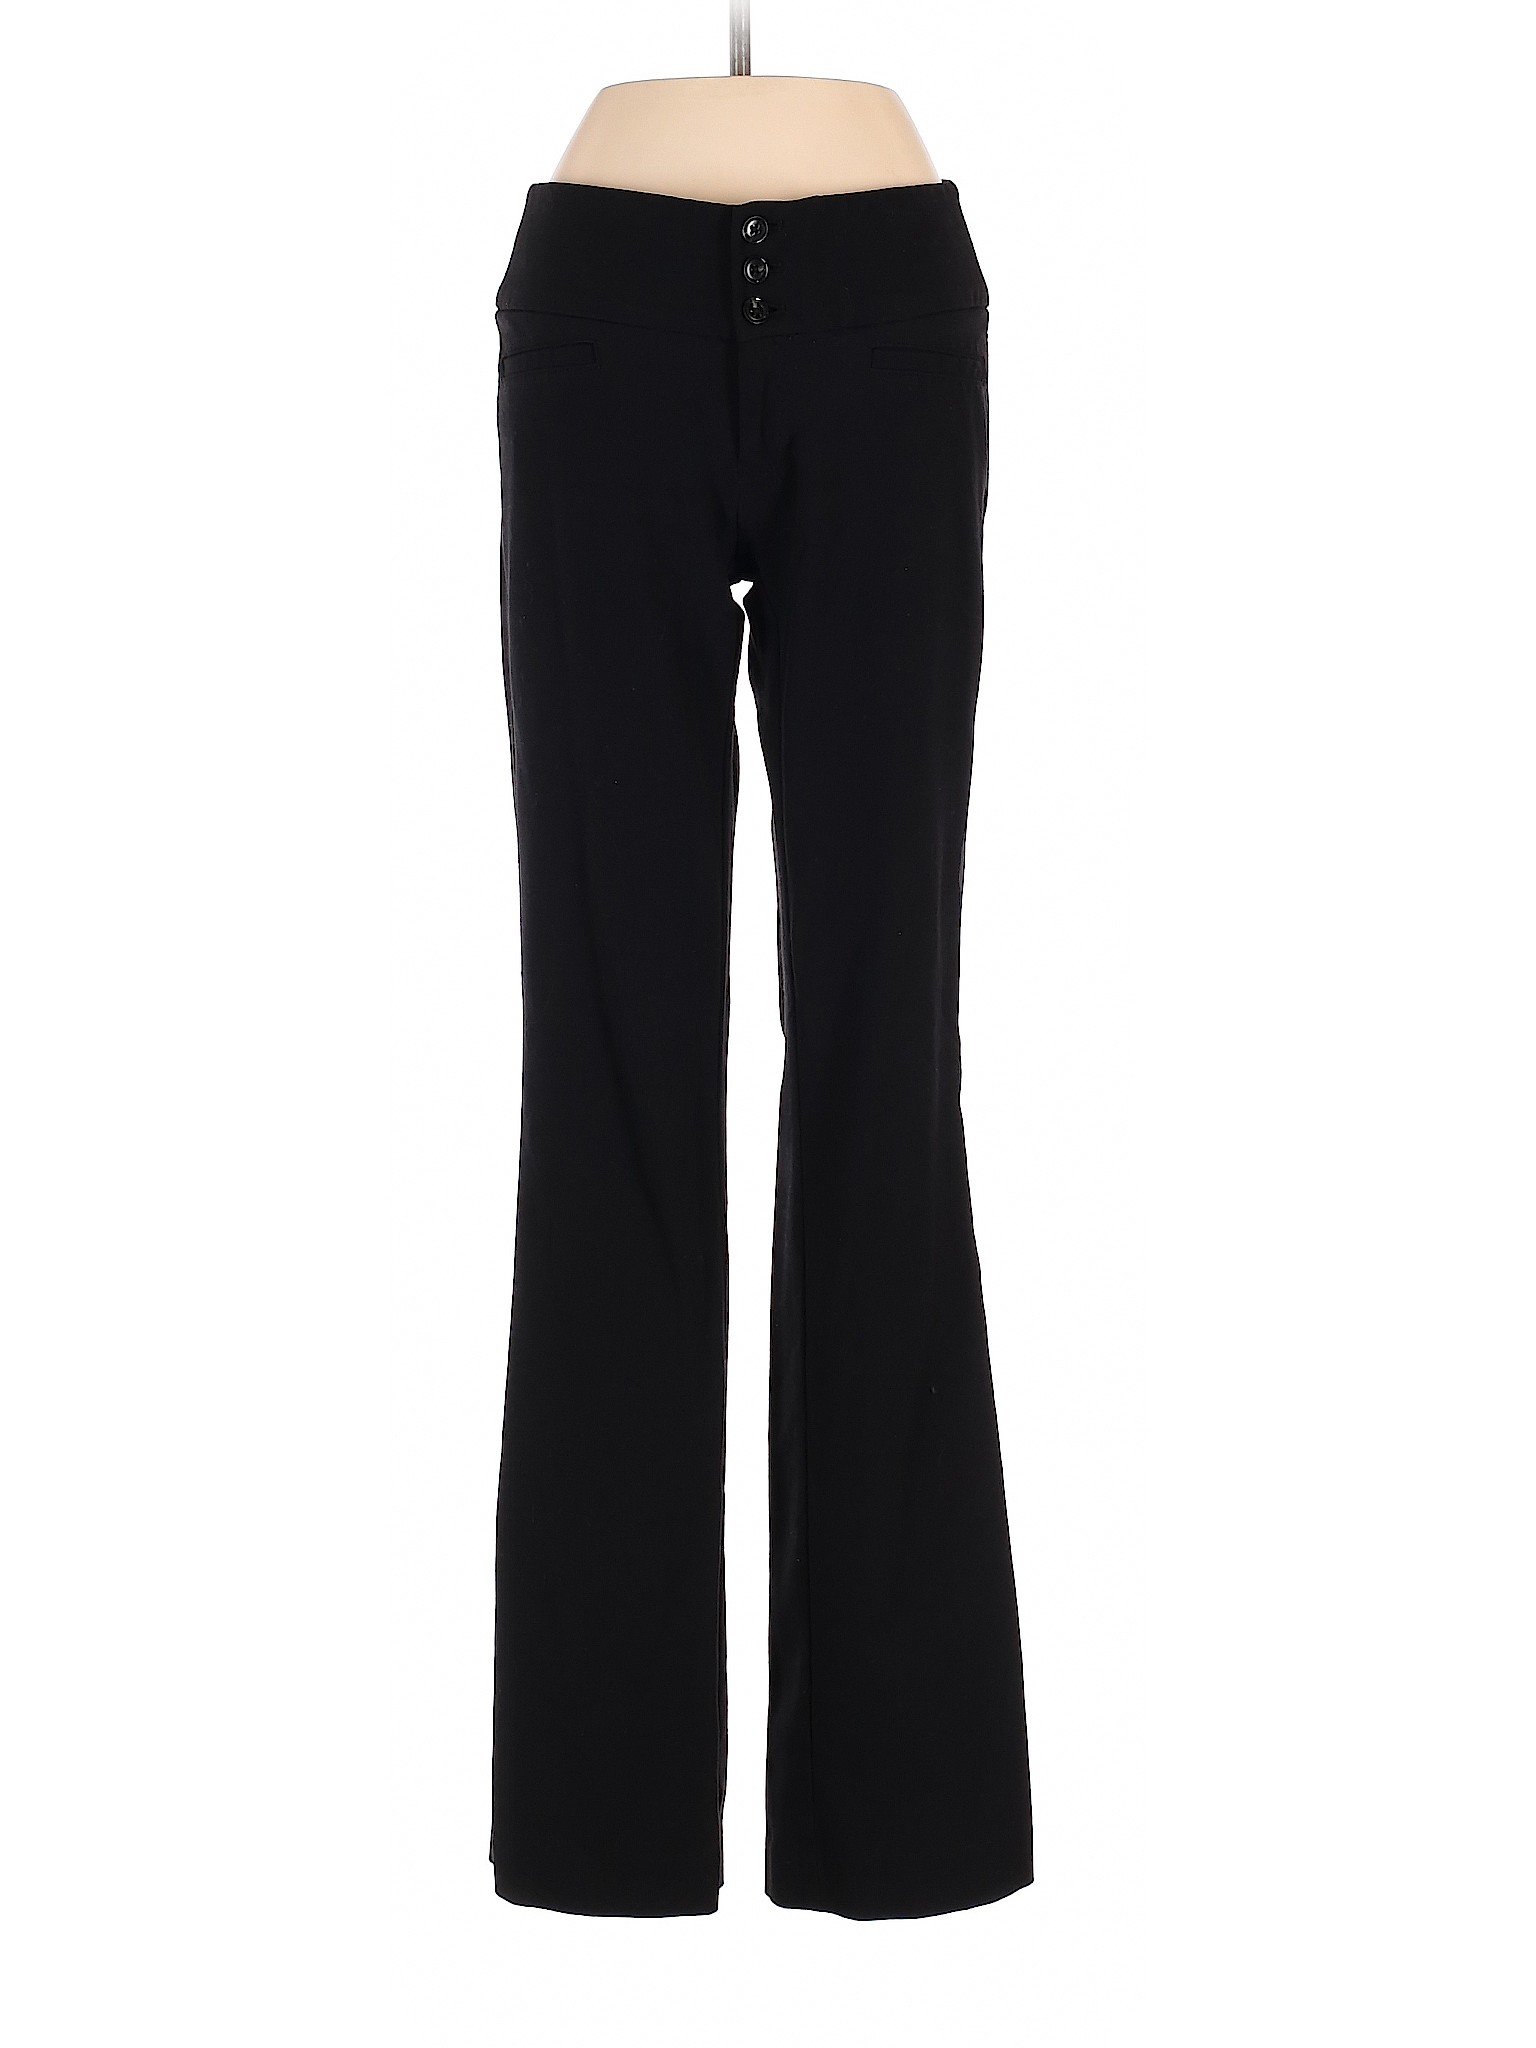 Hollywould Solid Black Dress Pants Size 0 - 87% off | thredUP